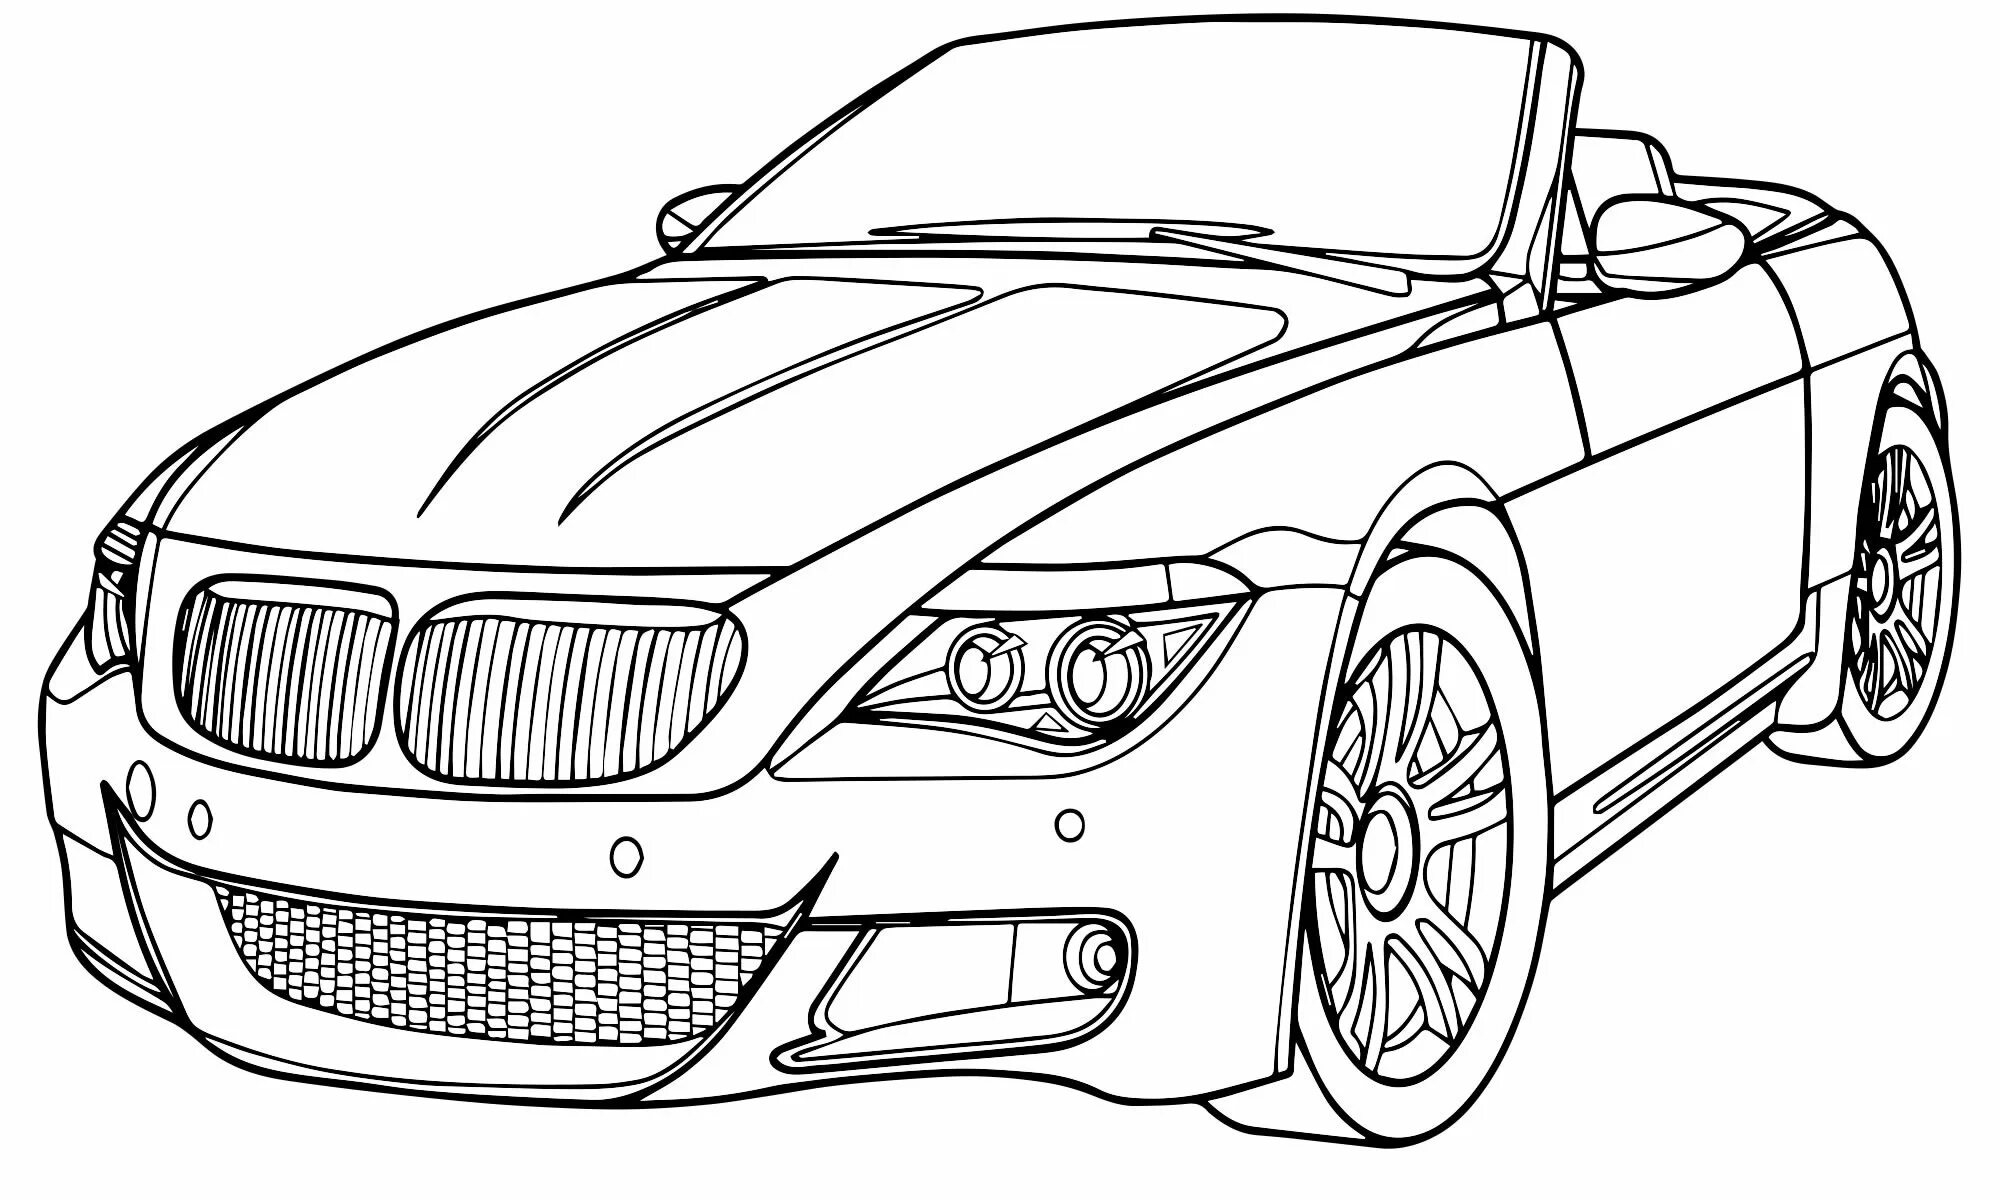 Раскраска BMW m5 f90. Раскраски машины БМВ Е 46. Раскраска BMW e60. Раскраска БМВ е60. Распечатать м5